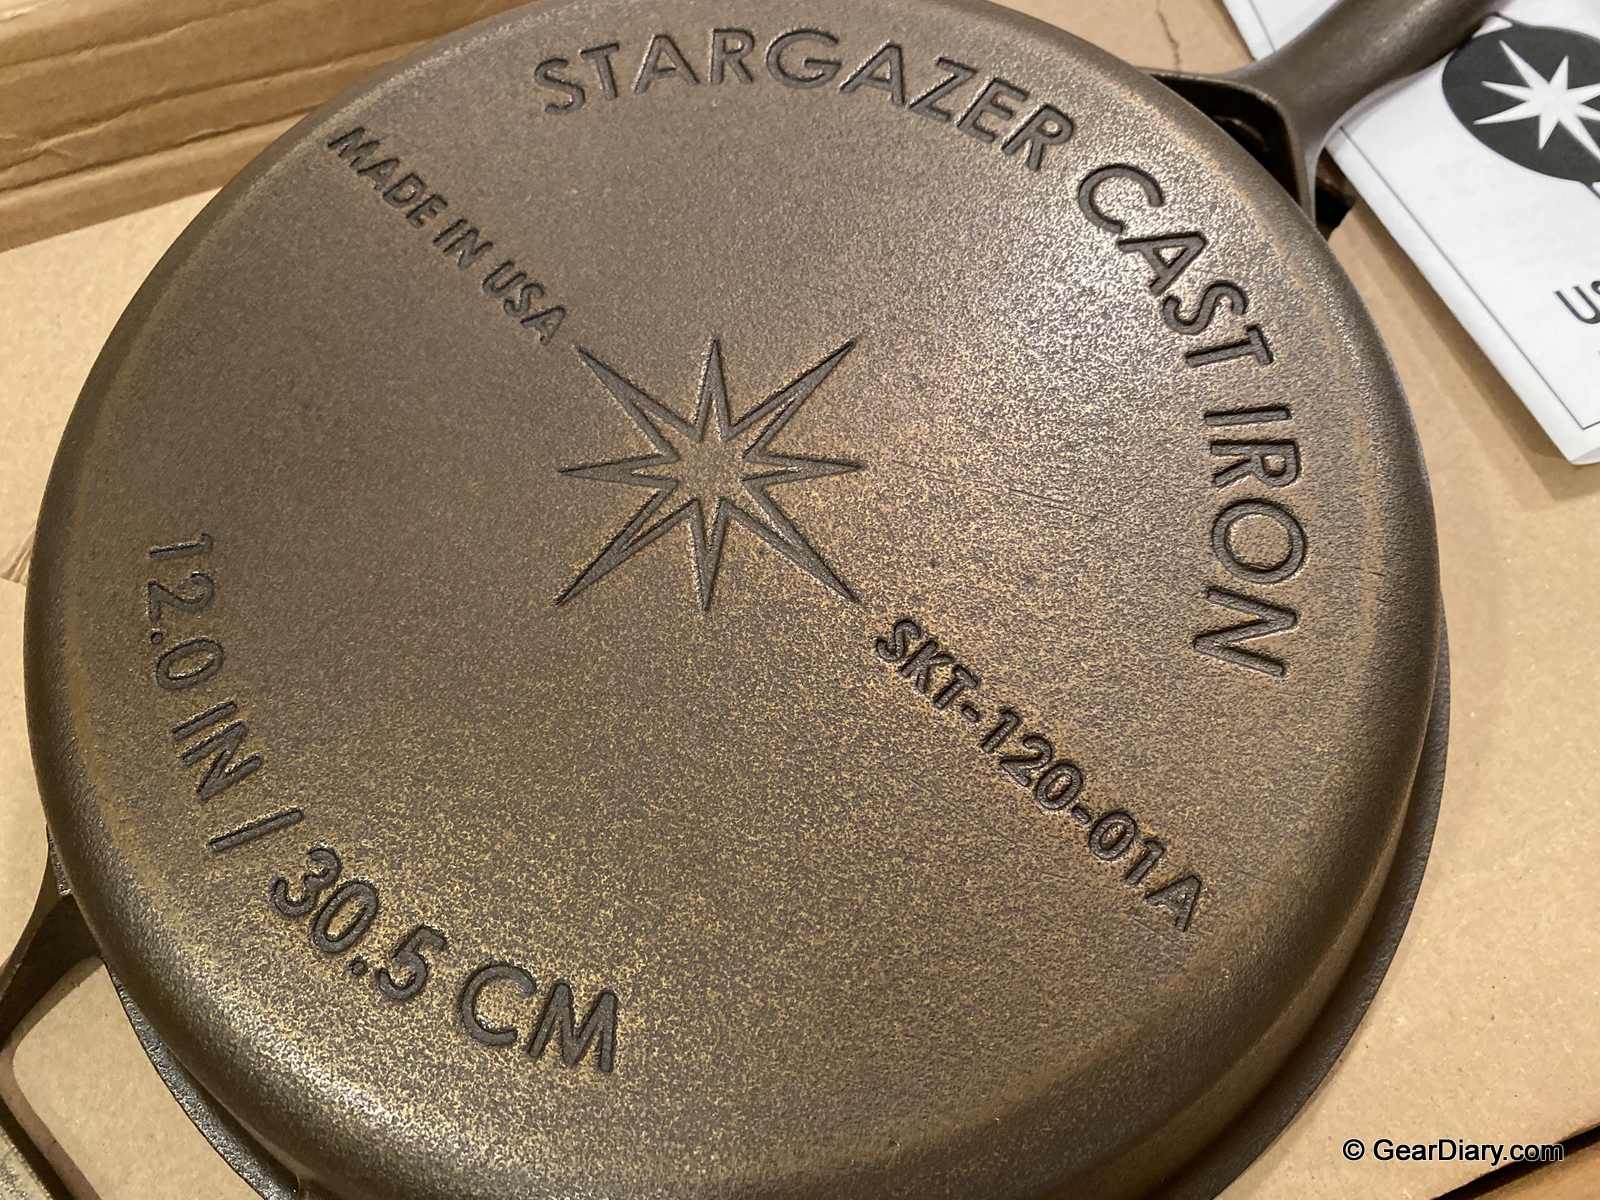 https://geardiary.com/wp-content/uploads/2020/02/02-Stargazer-Cast-Iron-GearDiary.com-001.jpg